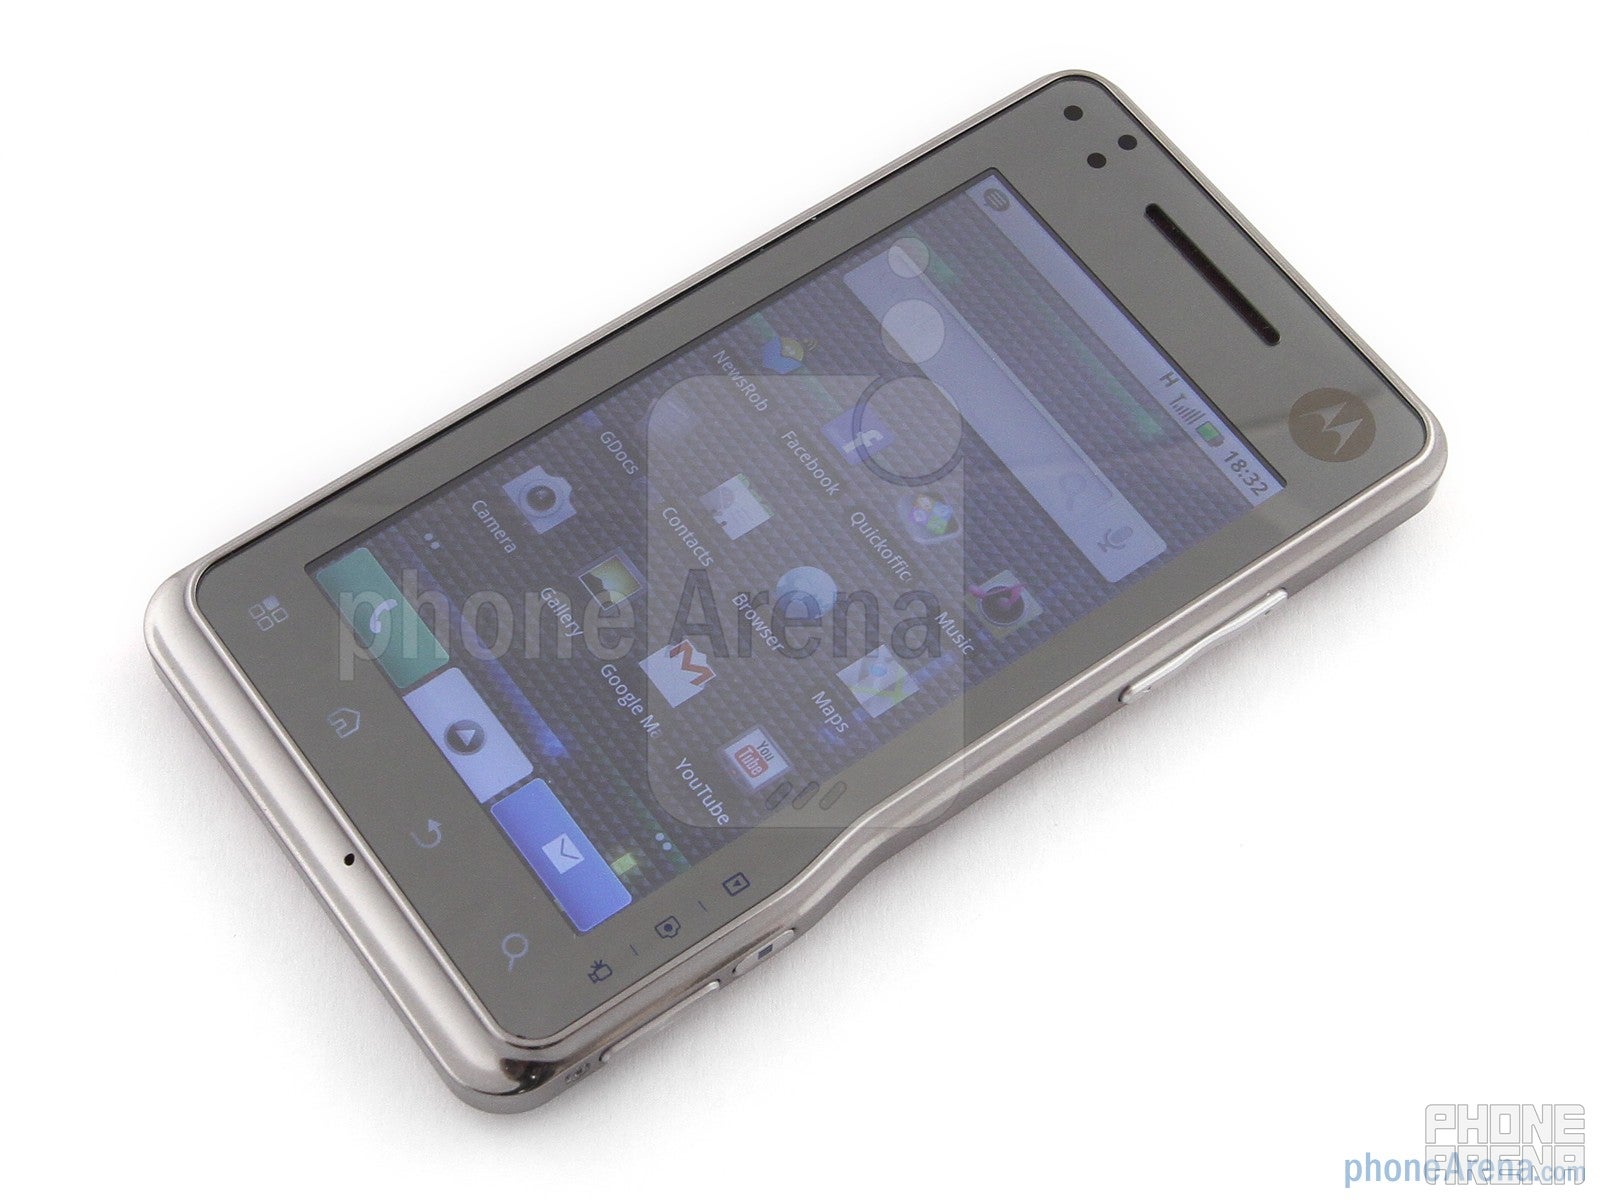 Motorola MILESTONE XT720 specs, review, release date - PhonesData